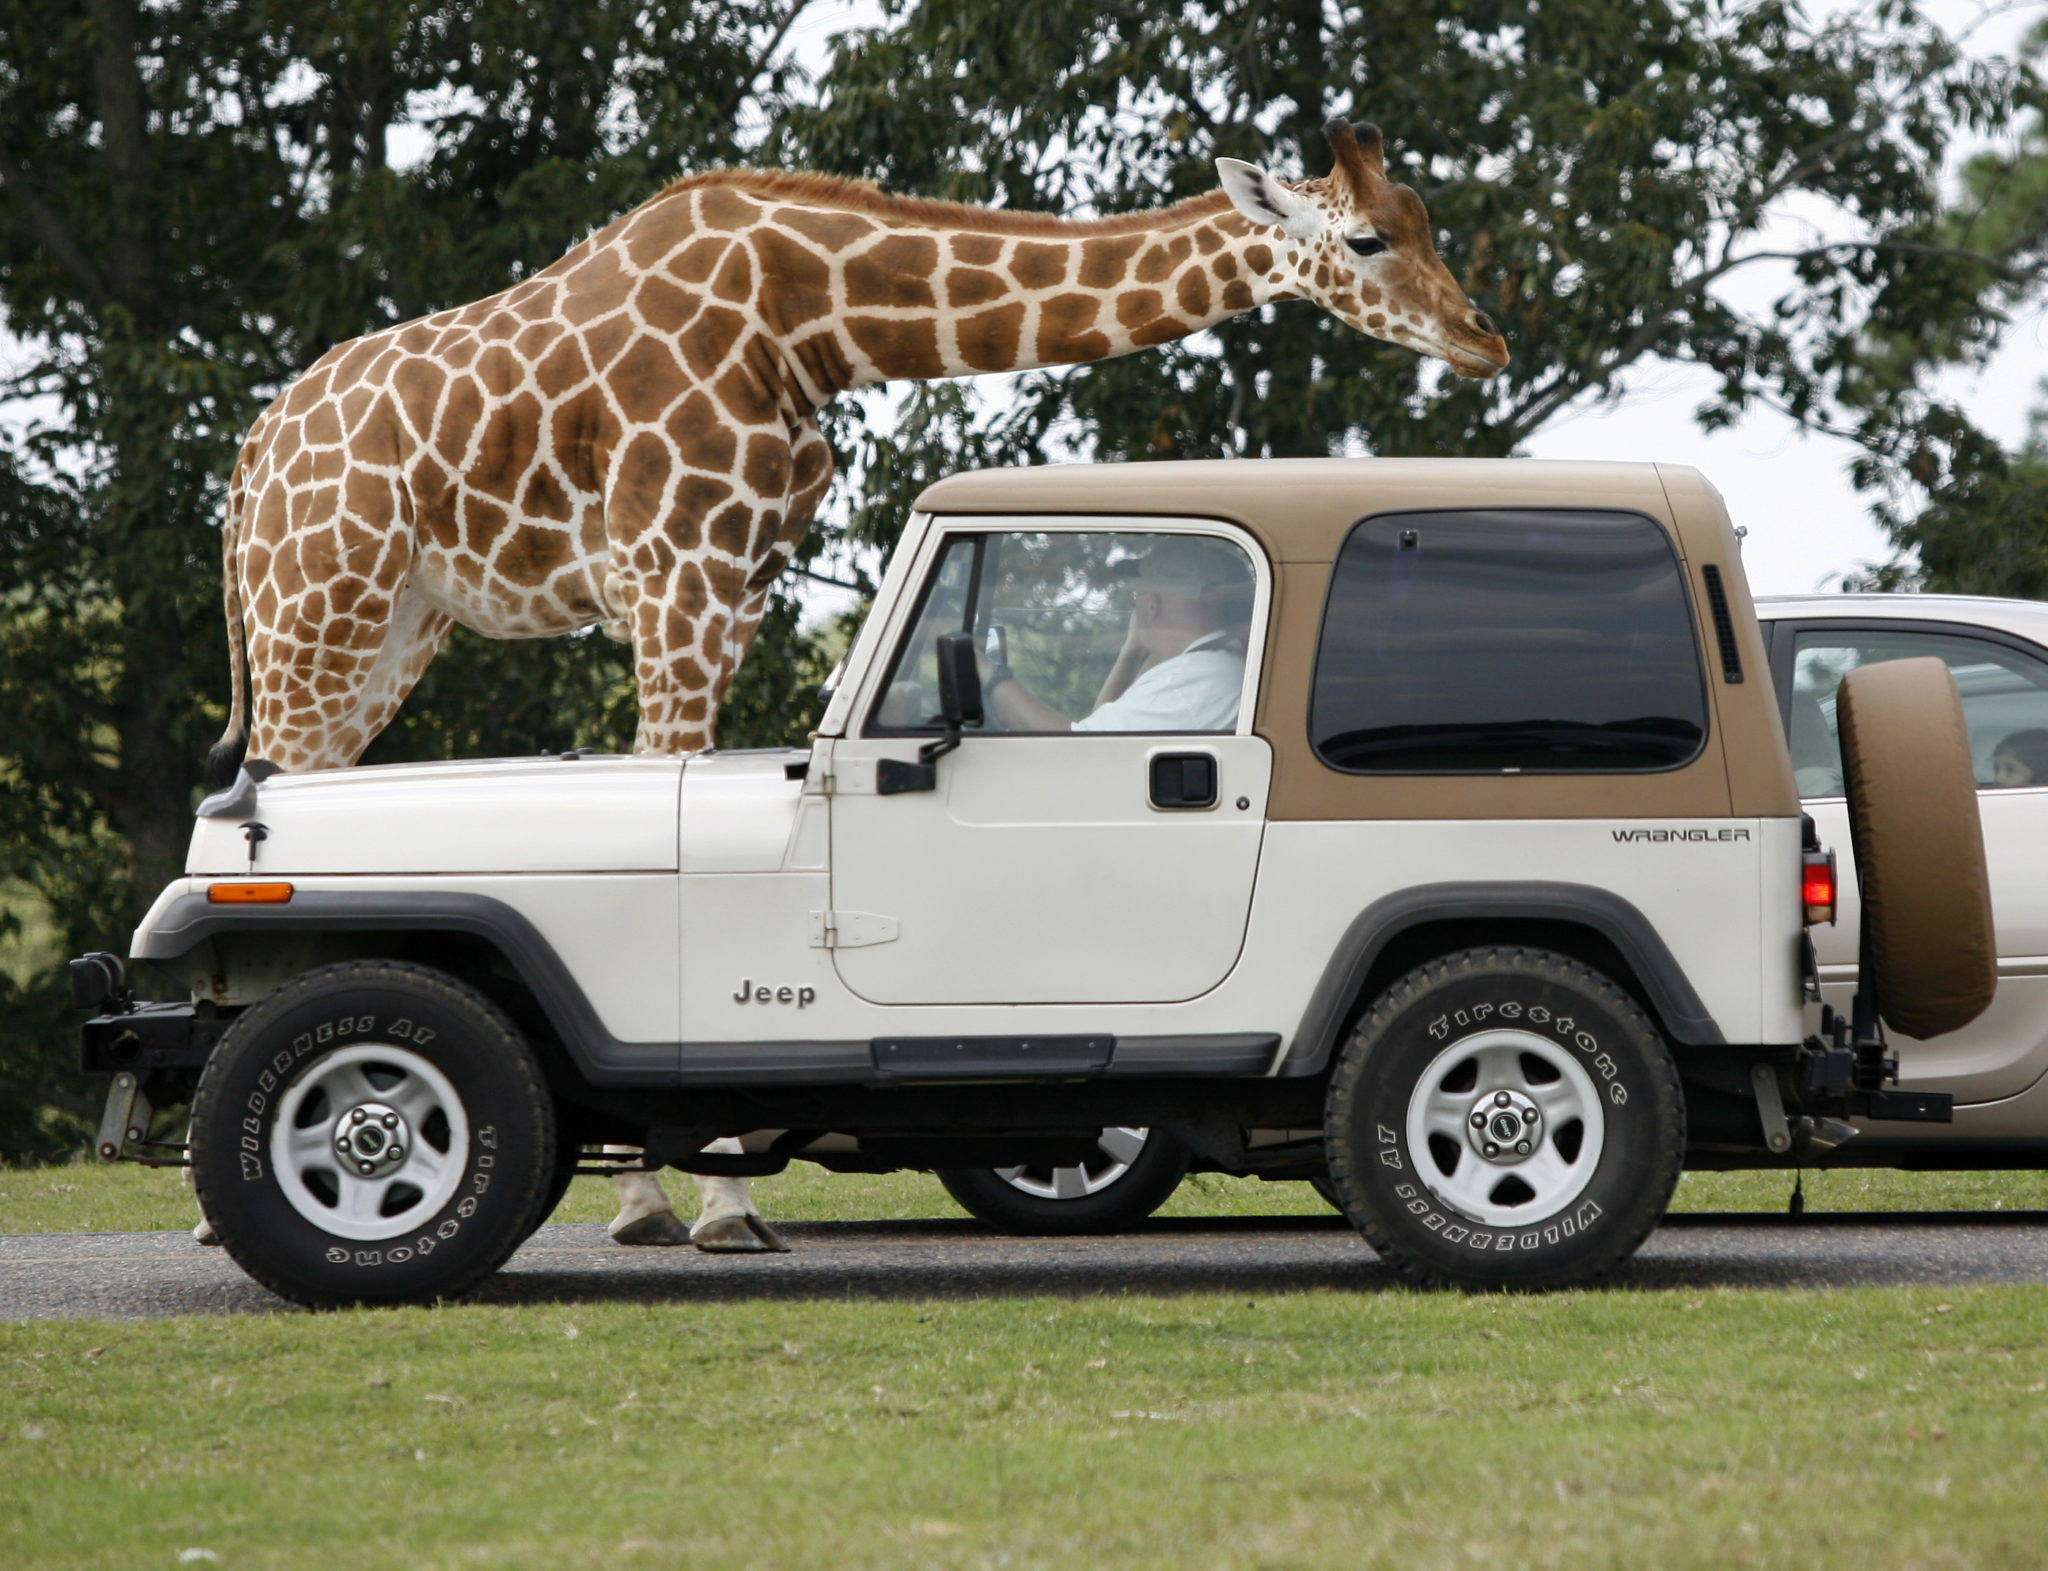 a giraffe approaches a jeep at the drive thru safari at Great Adventure.